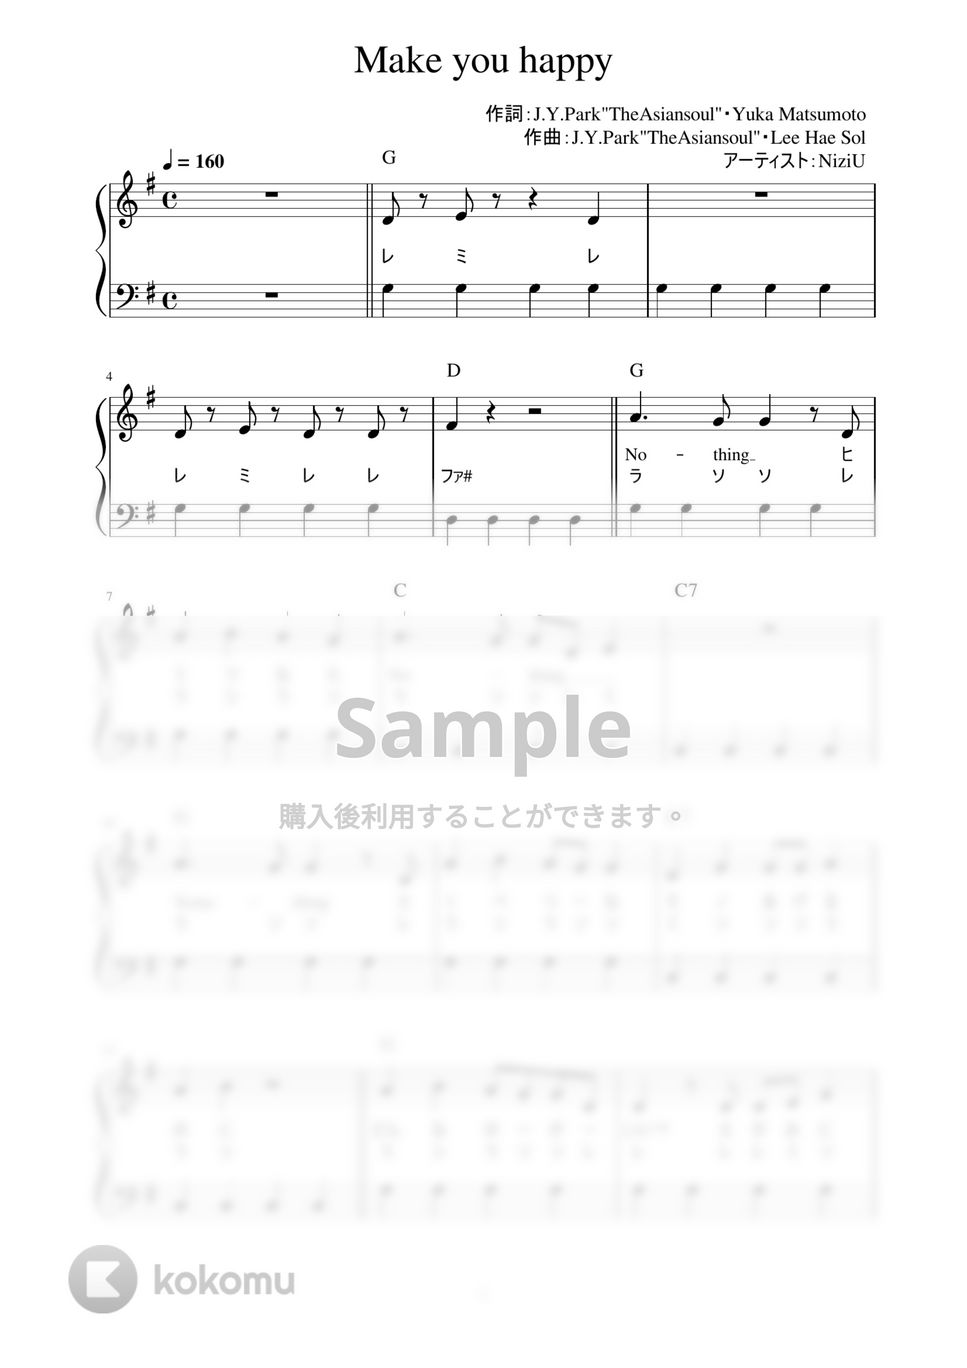 NiziU - Make you happy (かんたん / 歌詞付き / ドレミ付き / 初心者) by piano.tokyo